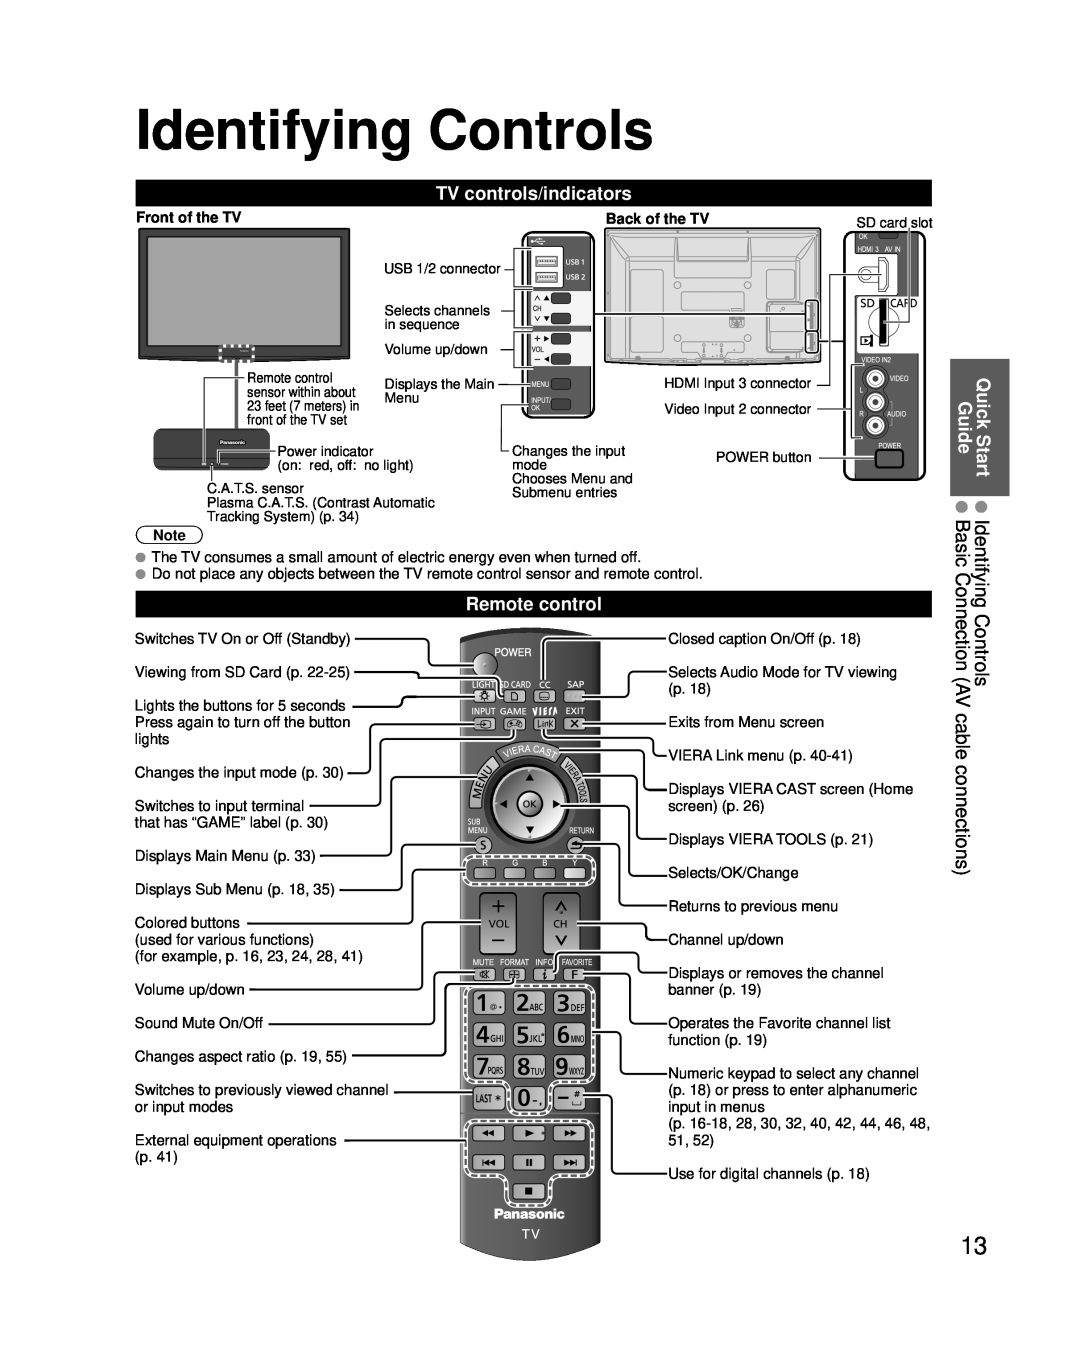 Panasonic TC-P46G25, TC-P42G25 Identifying Controls, Controls AV cable connections, TV controls/indicators, Remote control 